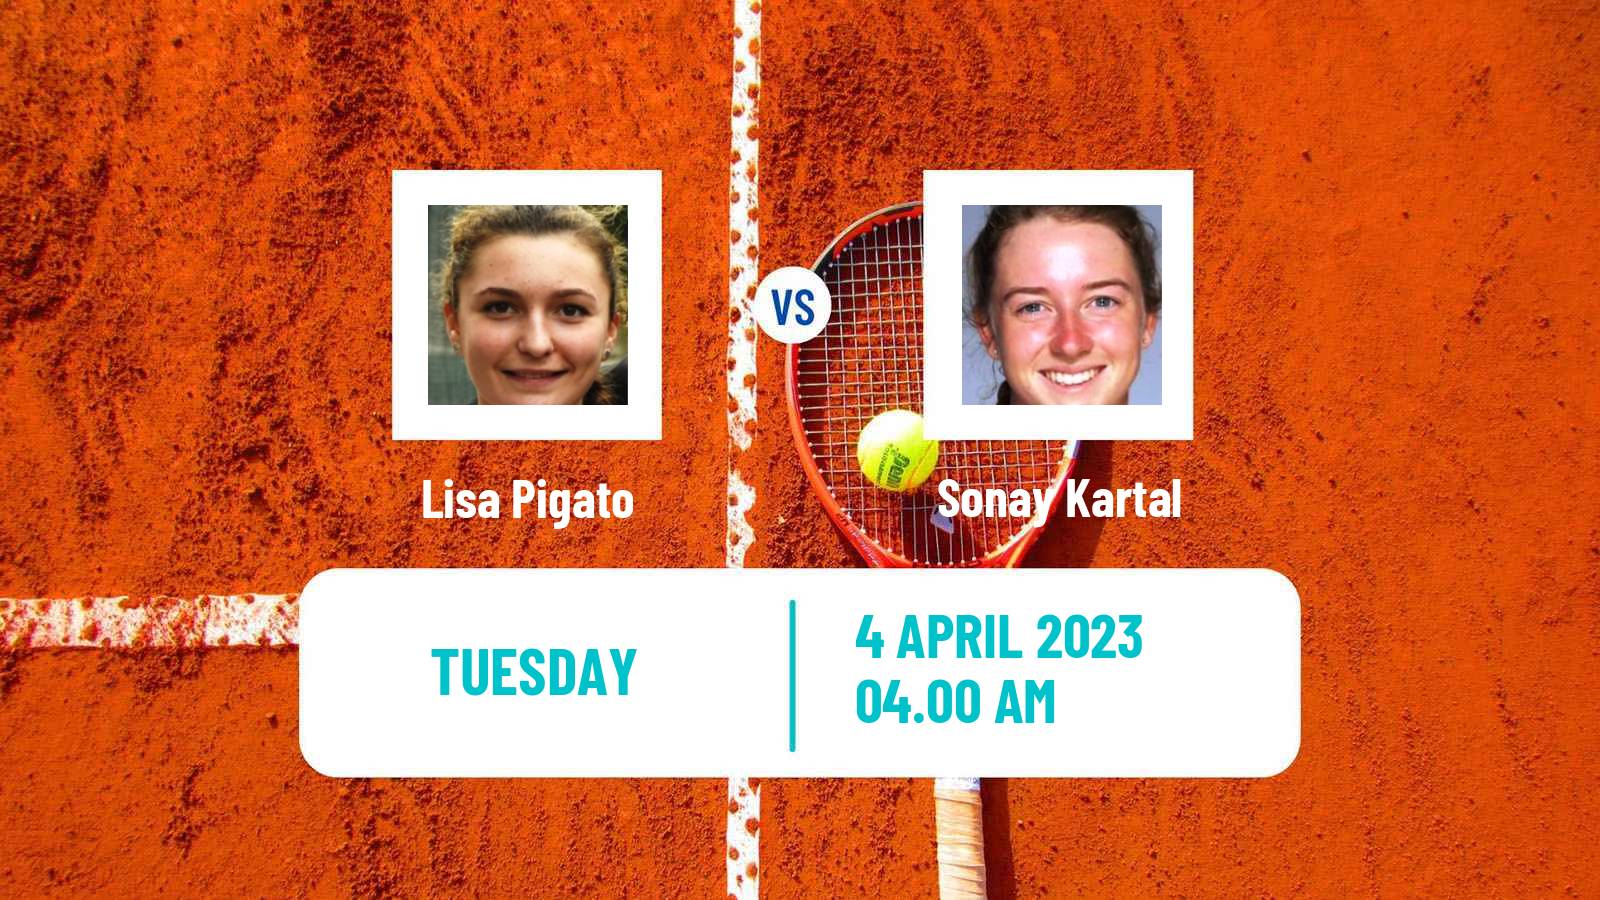 Tennis ITF Tournaments Lisa Pigato - Sonay Kartal